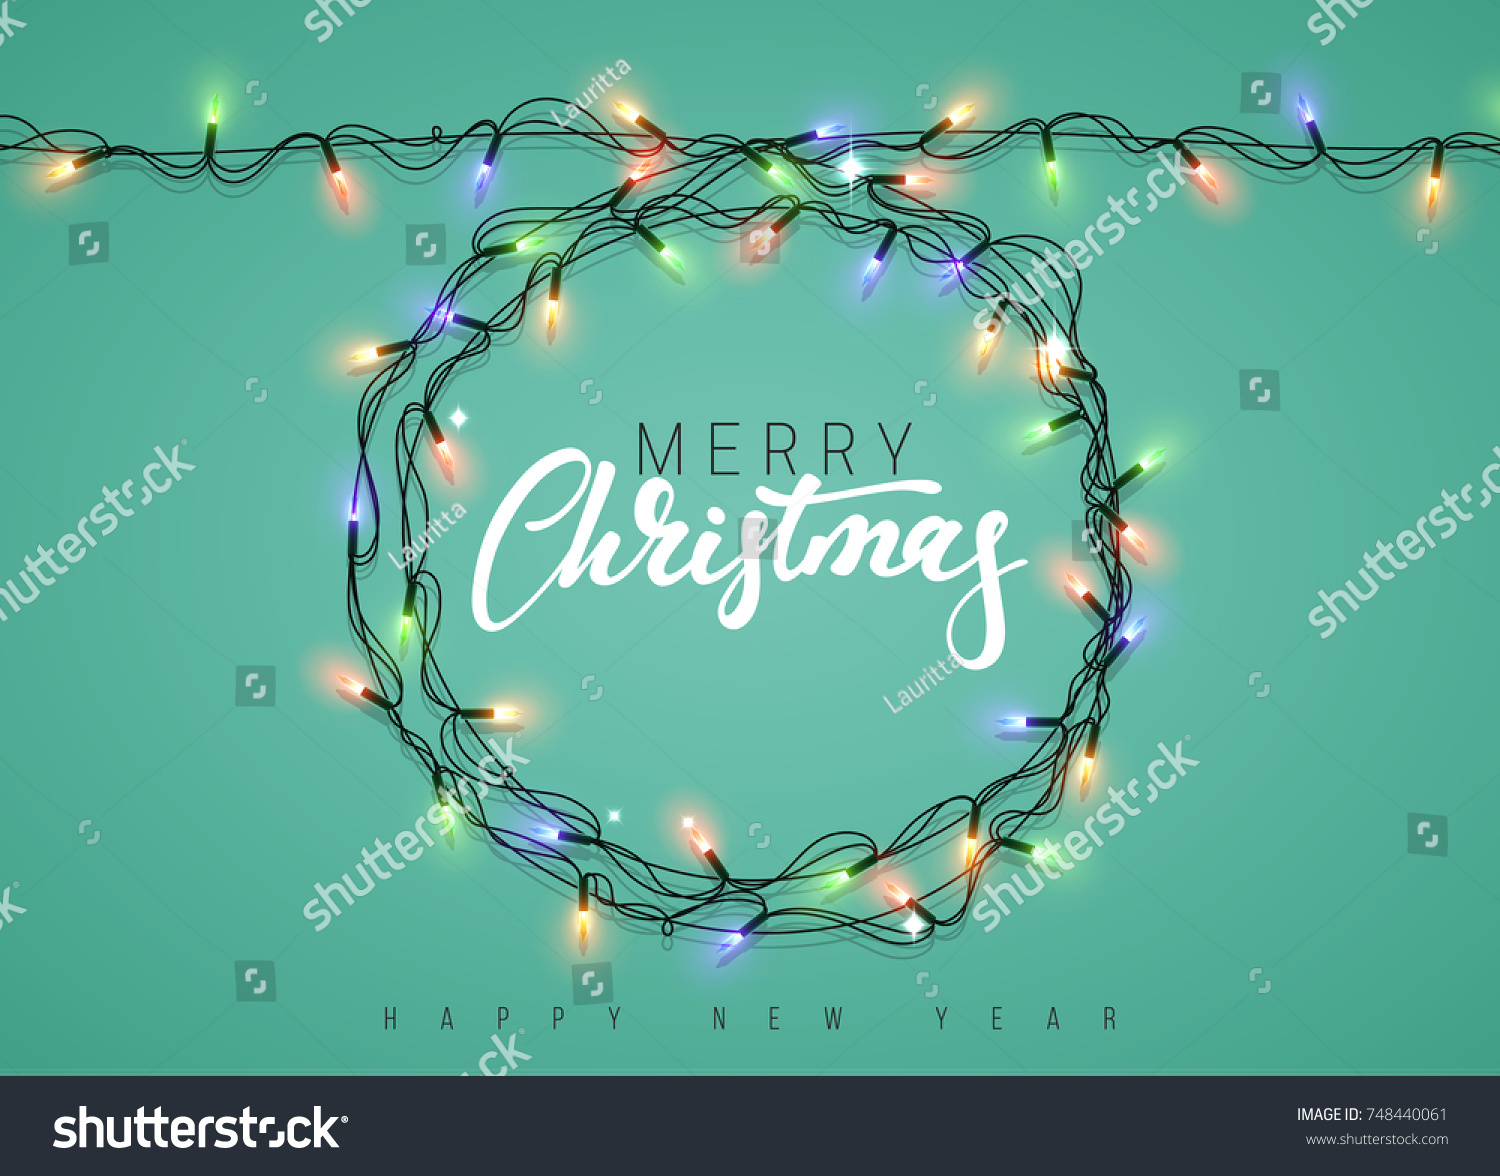 Glowing Christmas Lights Wreath Xmas Holiday Stock Illustration 